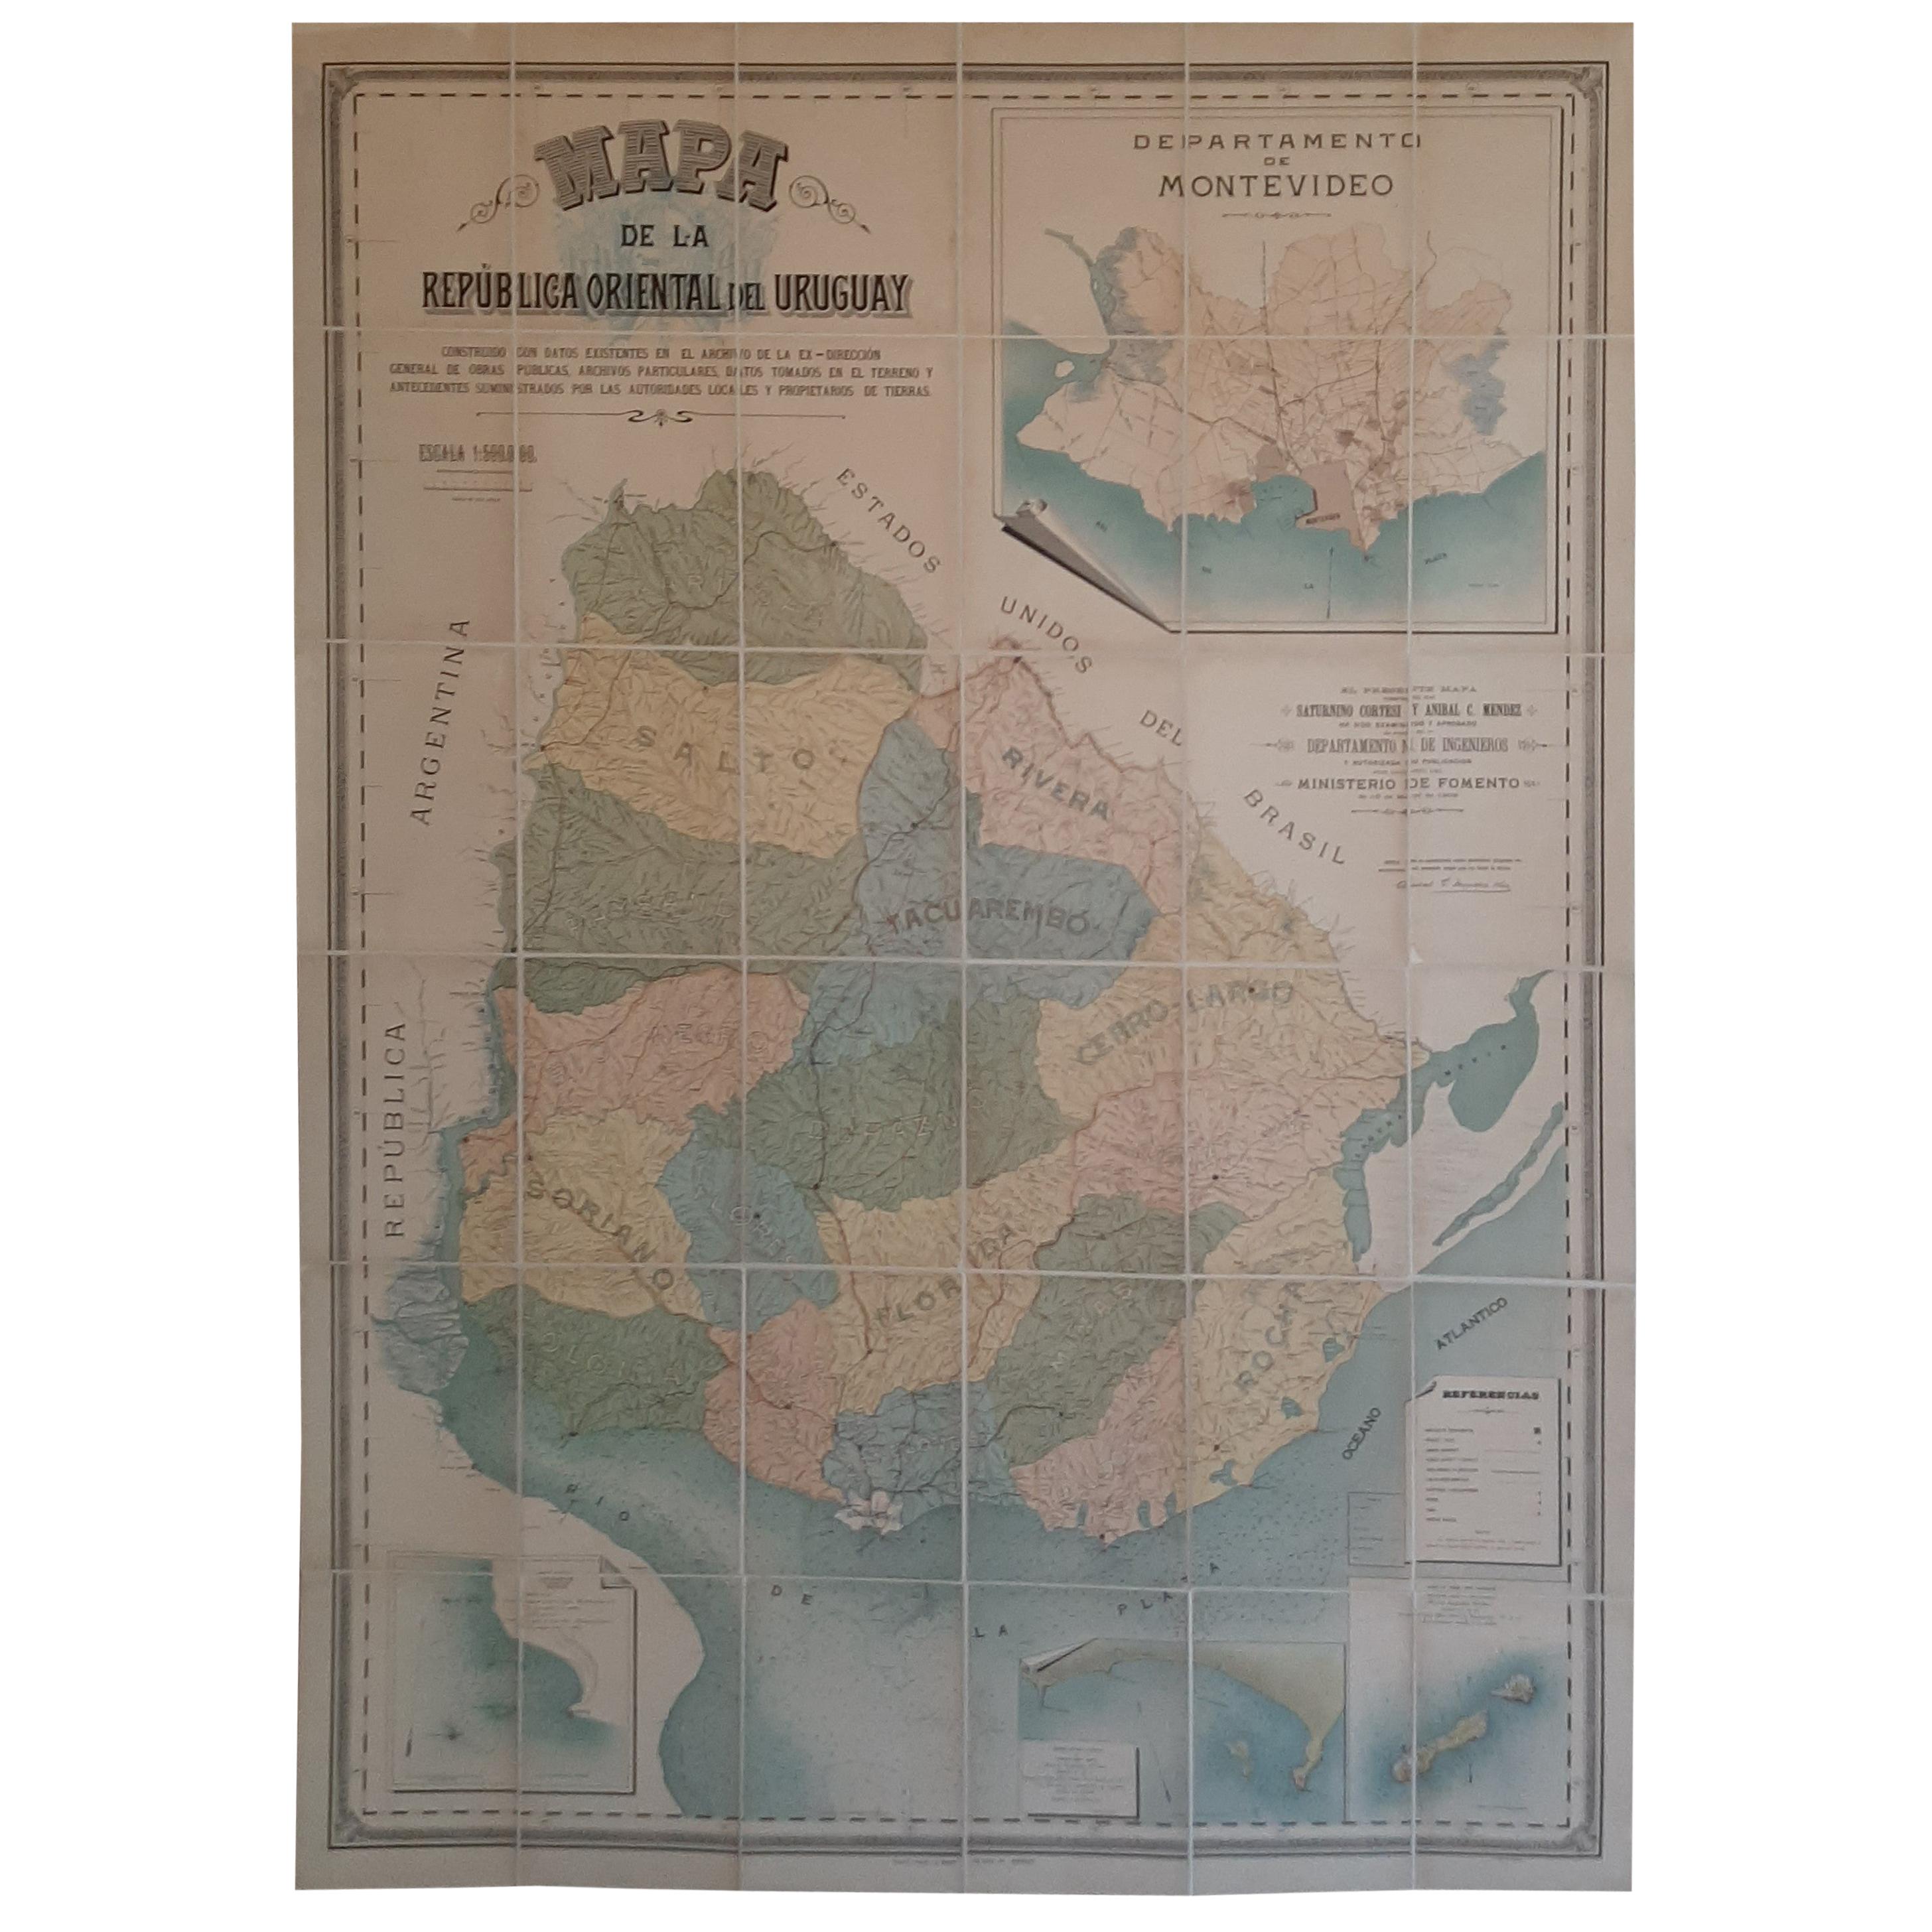 Cortesi's Masterpiece: A Comprehensive and Authoritative Map of Uruguay, 1903